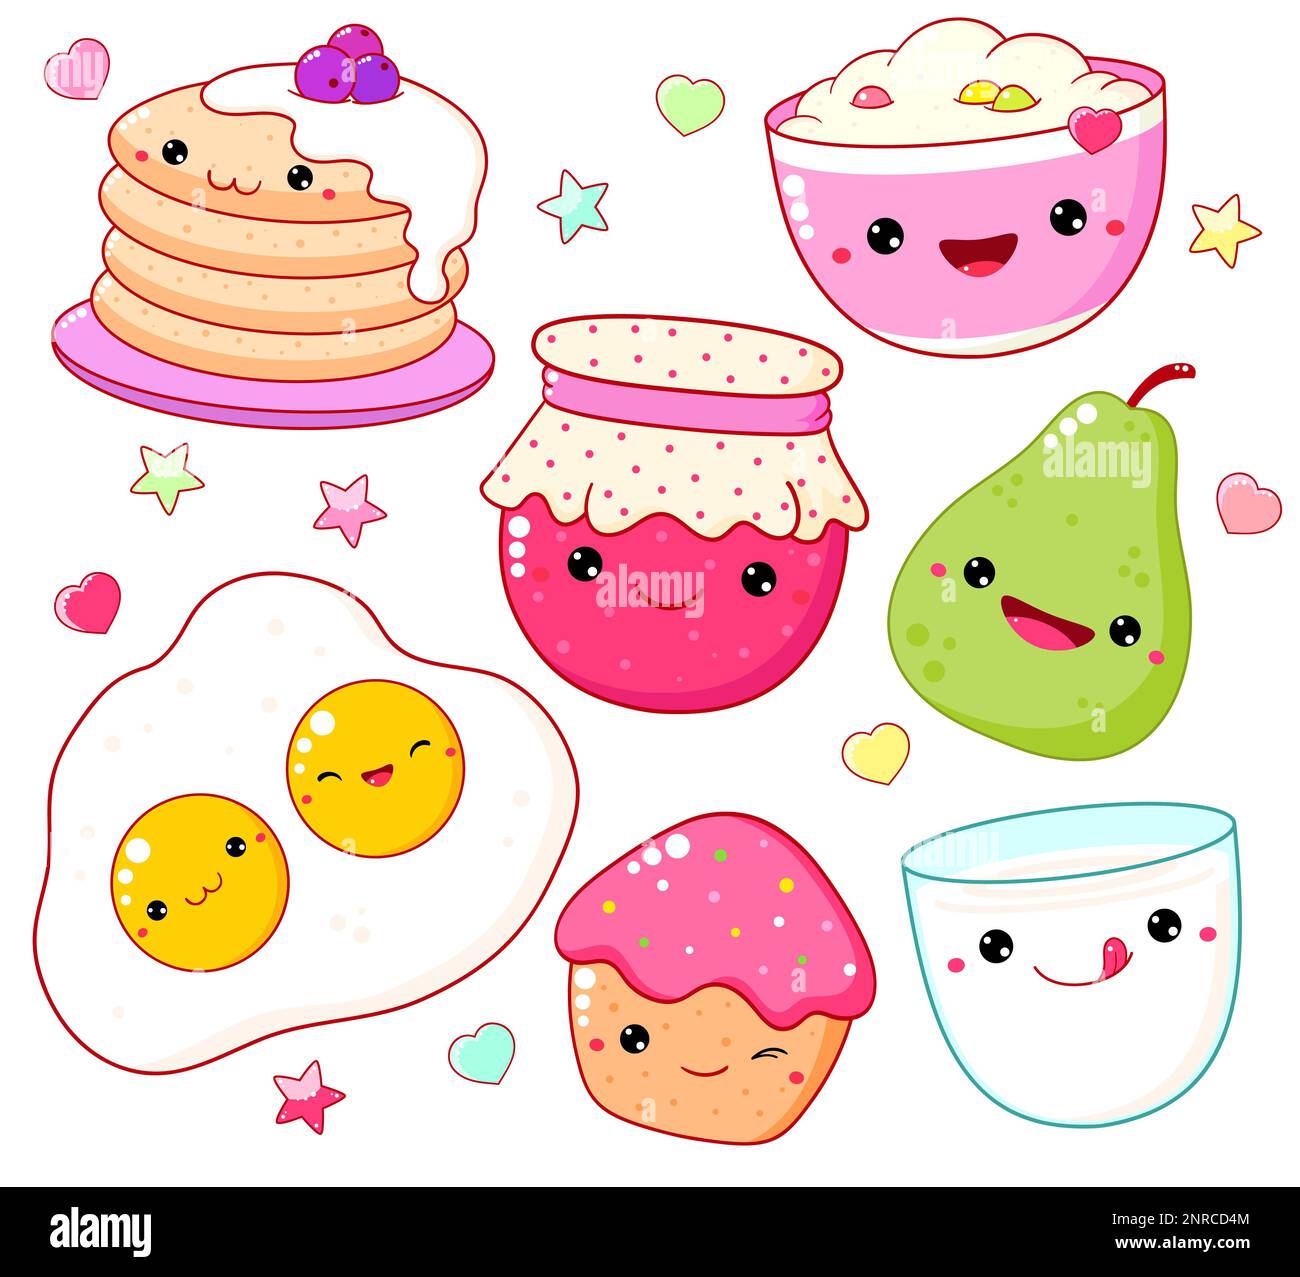 Breakfast time. Set of cute food icons in kawaii style for sweet design. Scrambled eggs, cupcake, milk, oatmeal, pear, pancakes, jam. Vector illustrat Stock Photo